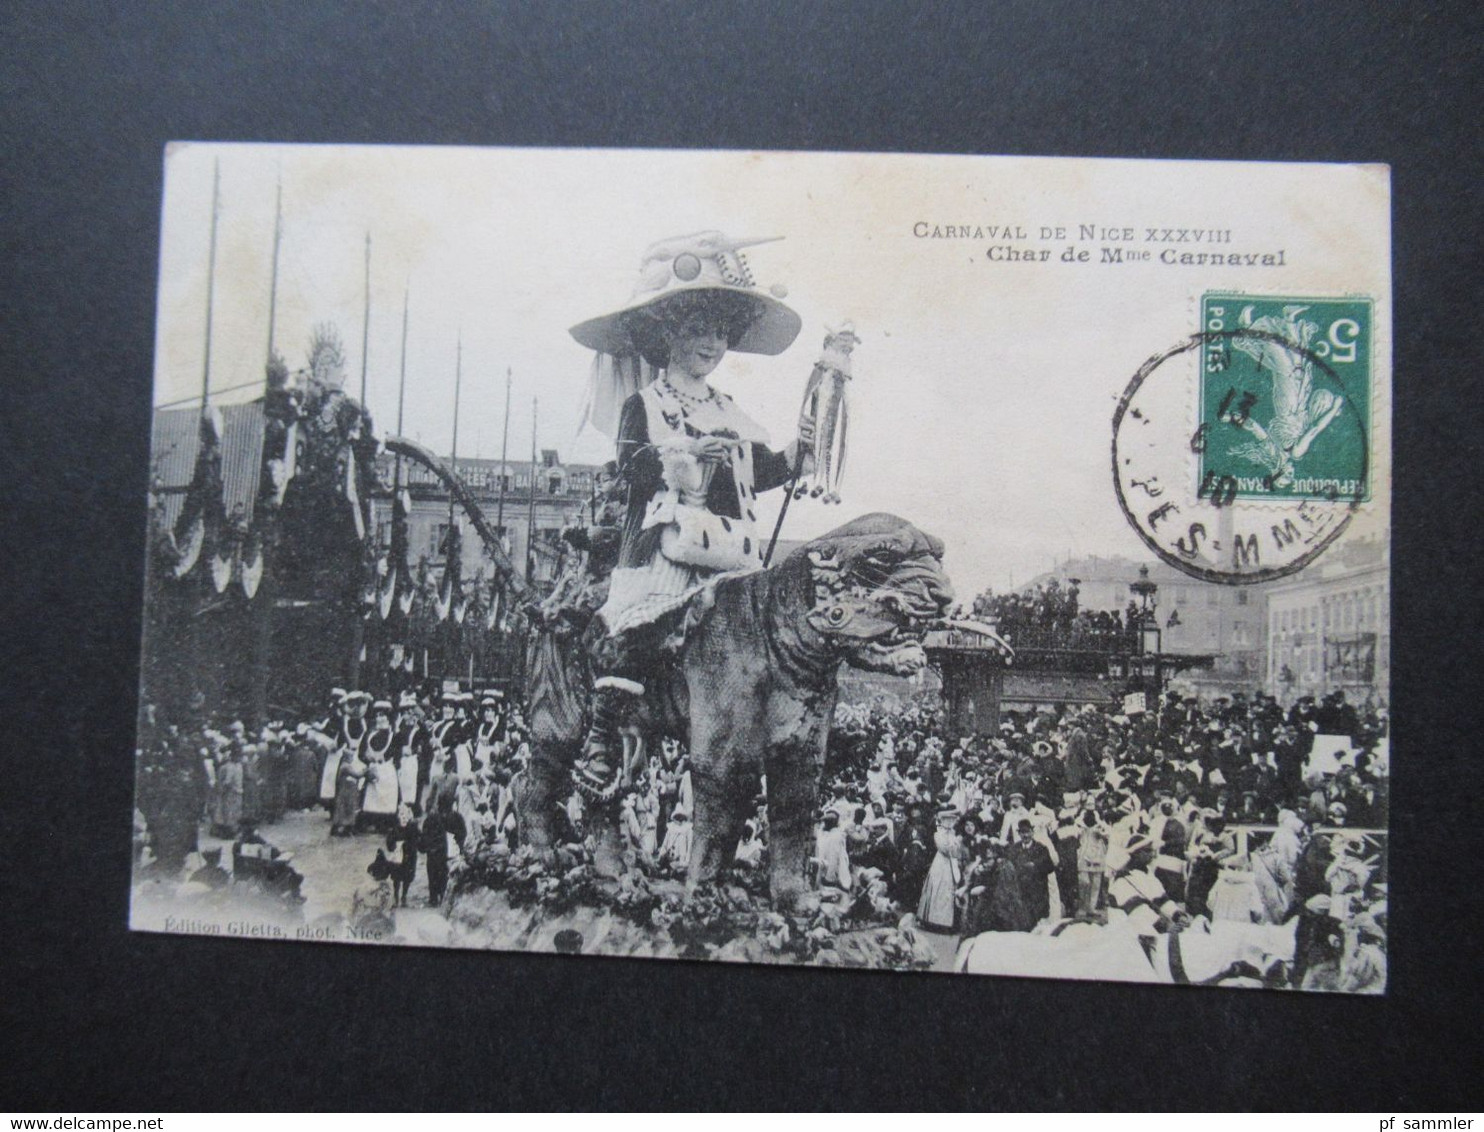 Frankreich 1910 AK Bildseitig Frankiert Fasching / Karneval Carnaval De Nice XXXVIII Char De Mme Carnaval - Carnaval